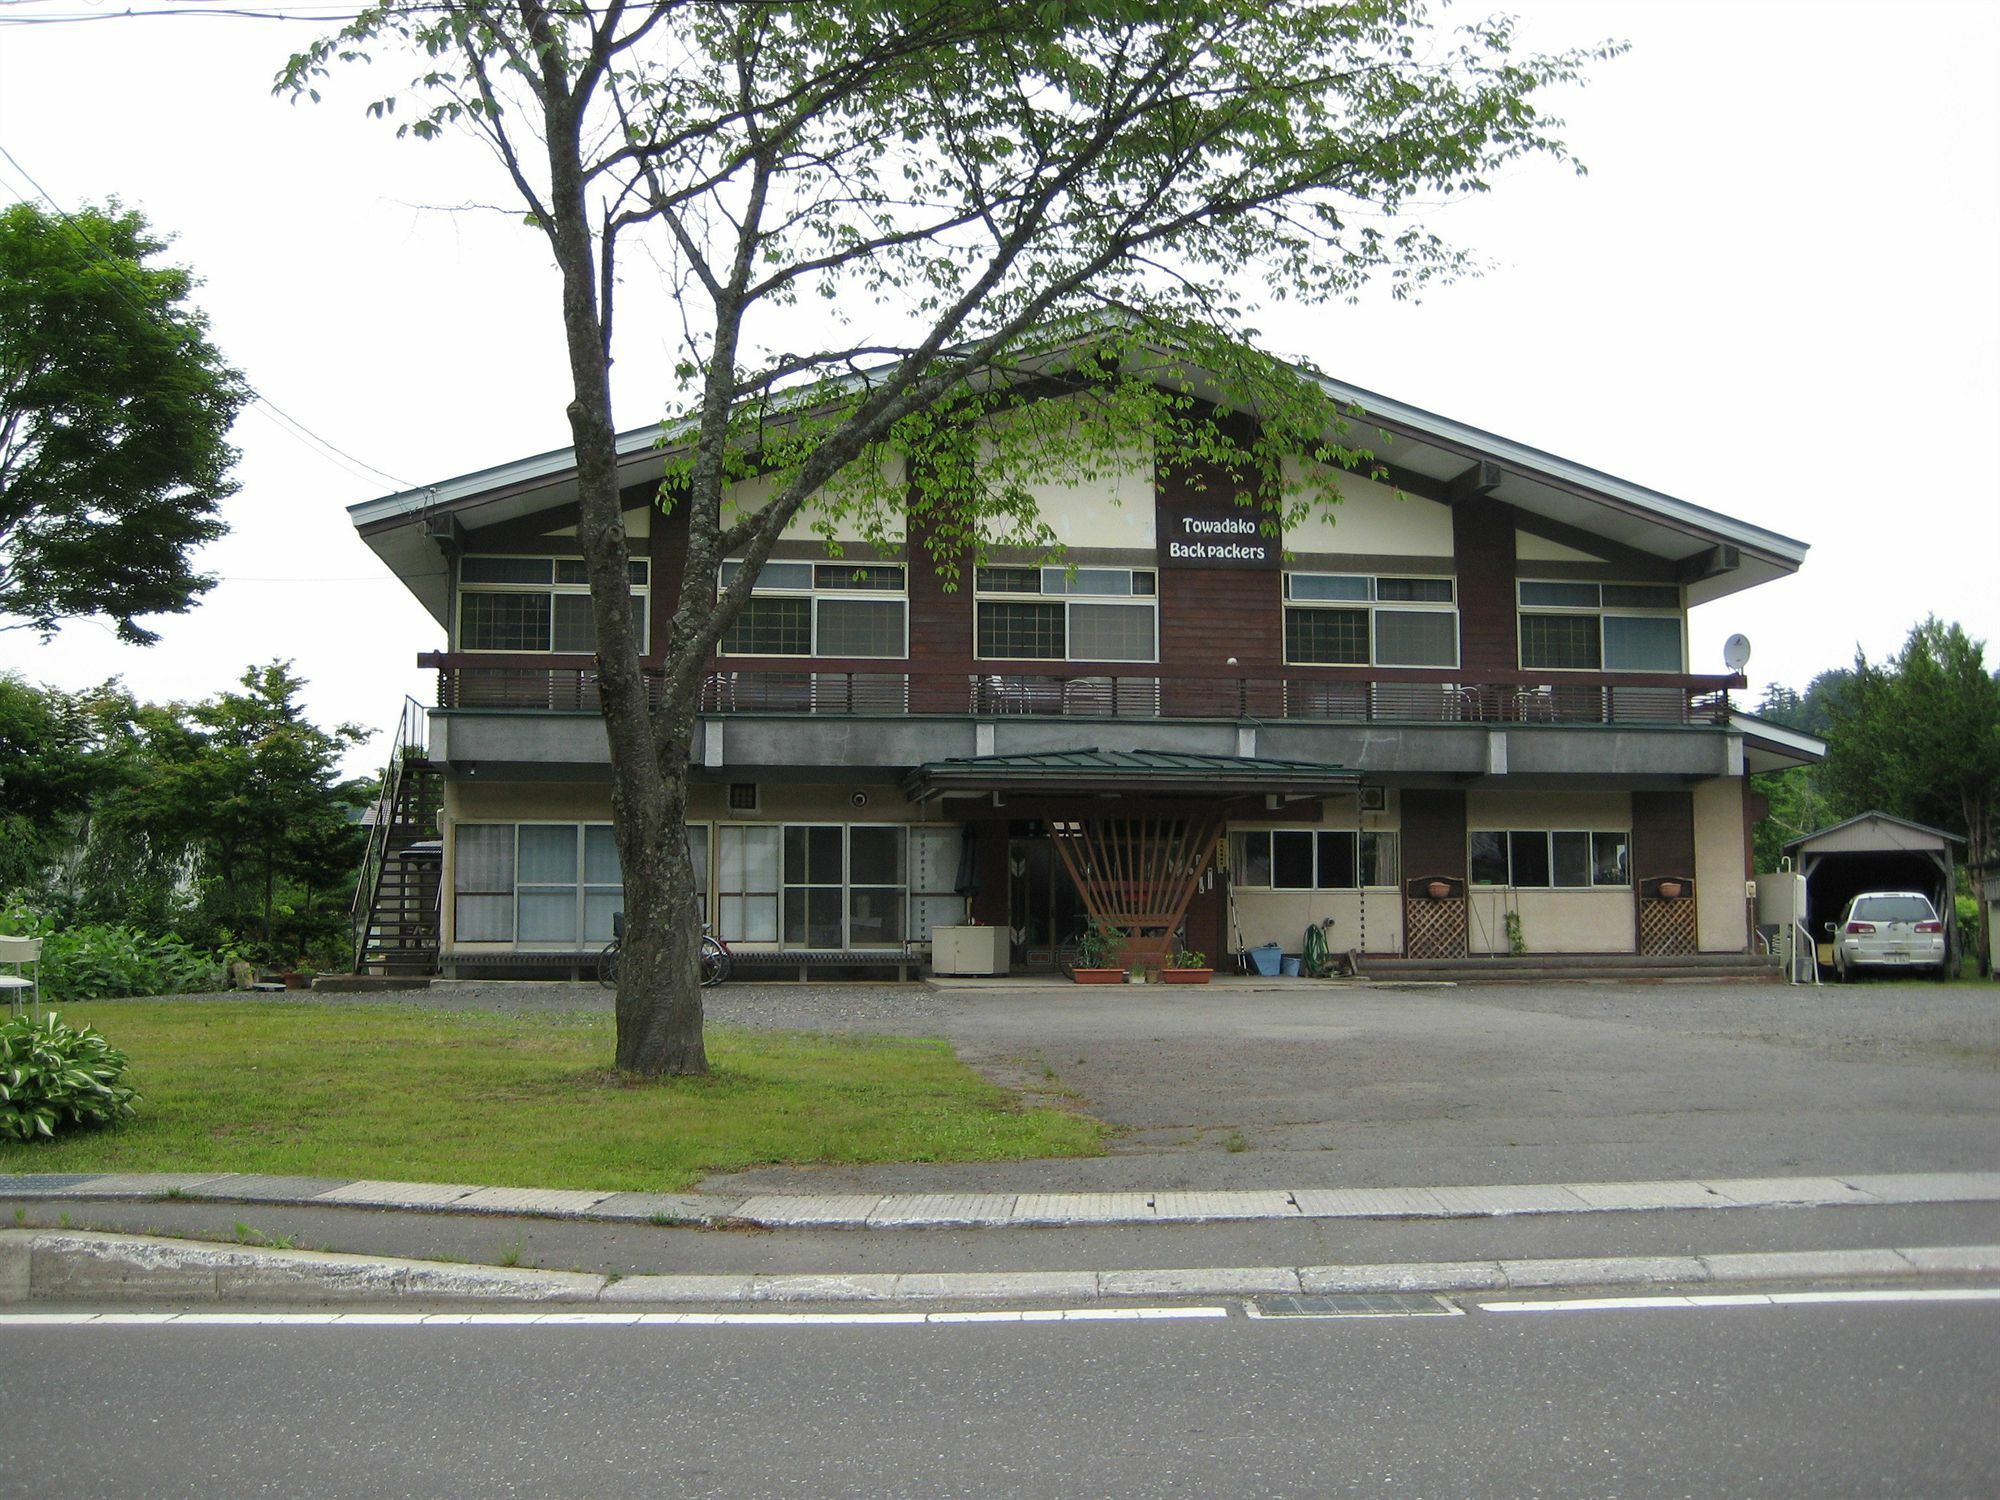 Hotel Towadako Backpackers Exterior foto